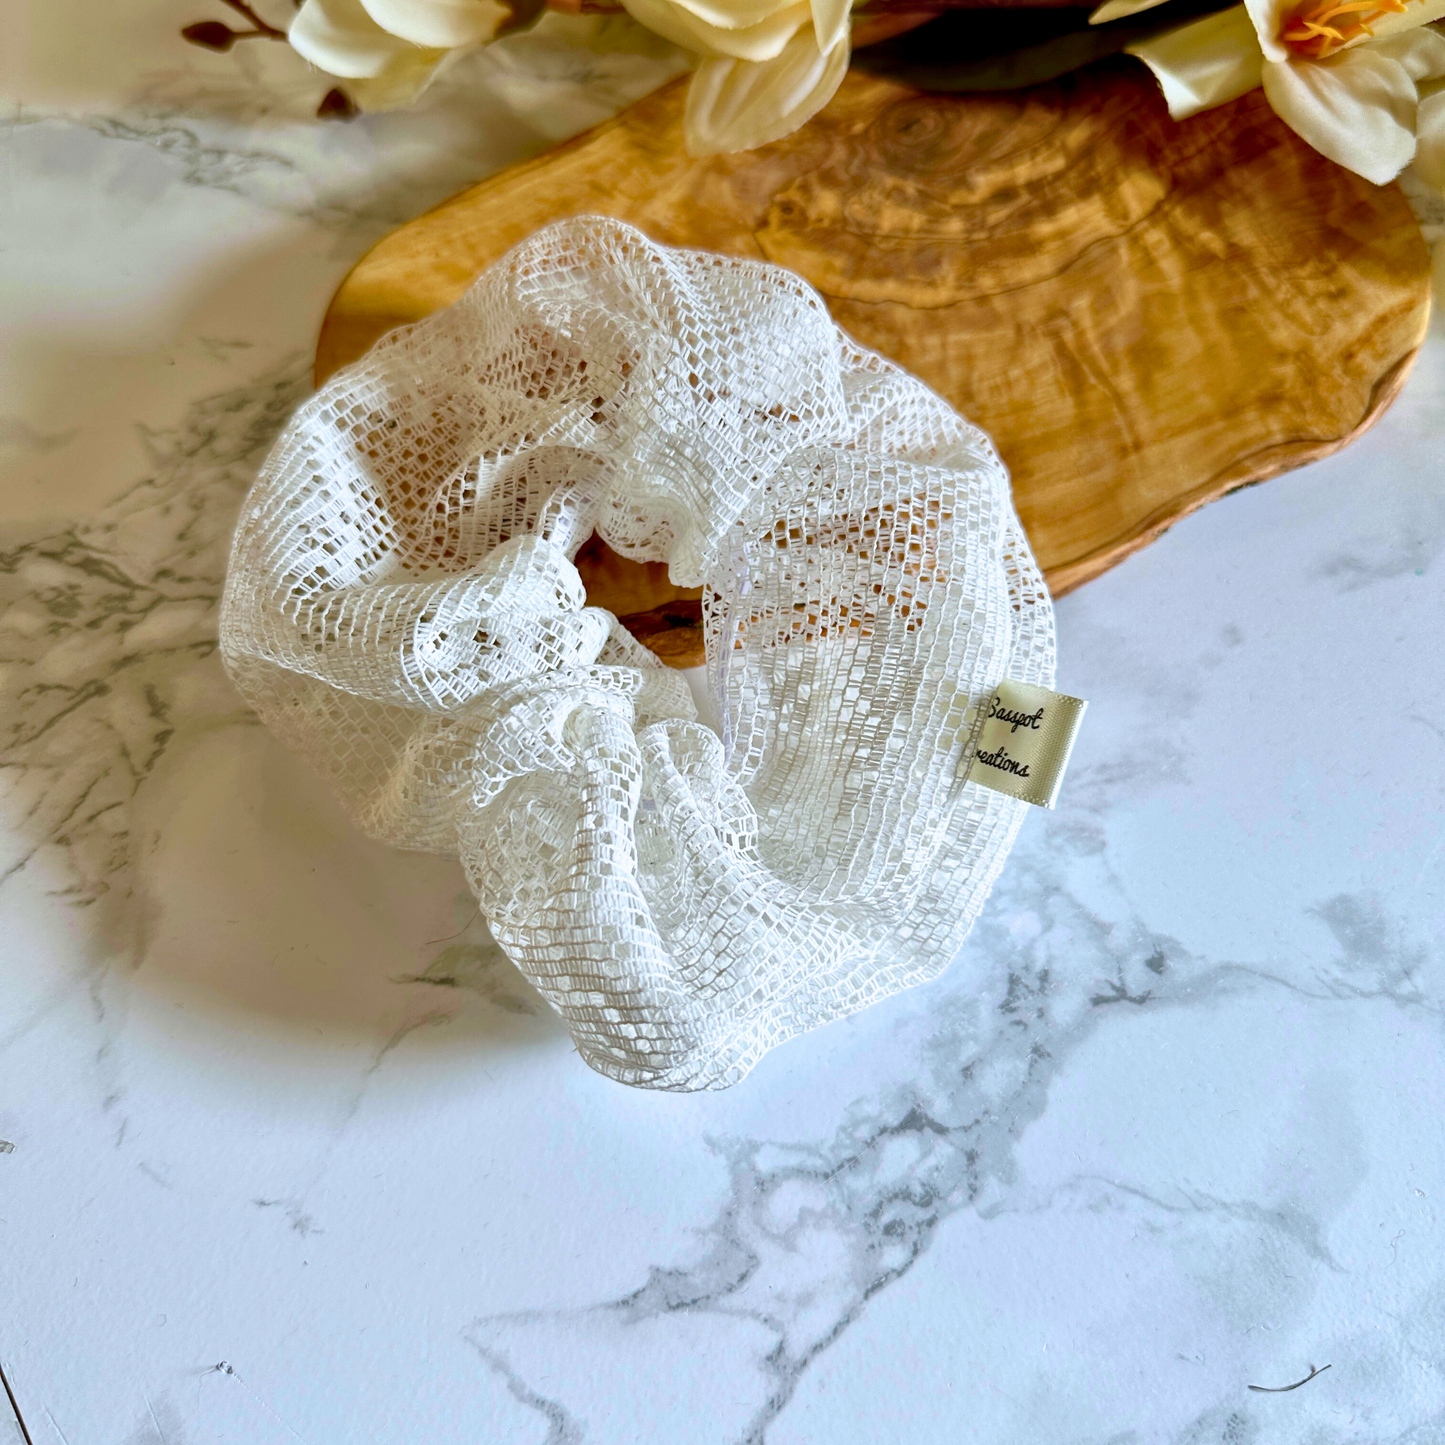 The Bridal Scrunchie